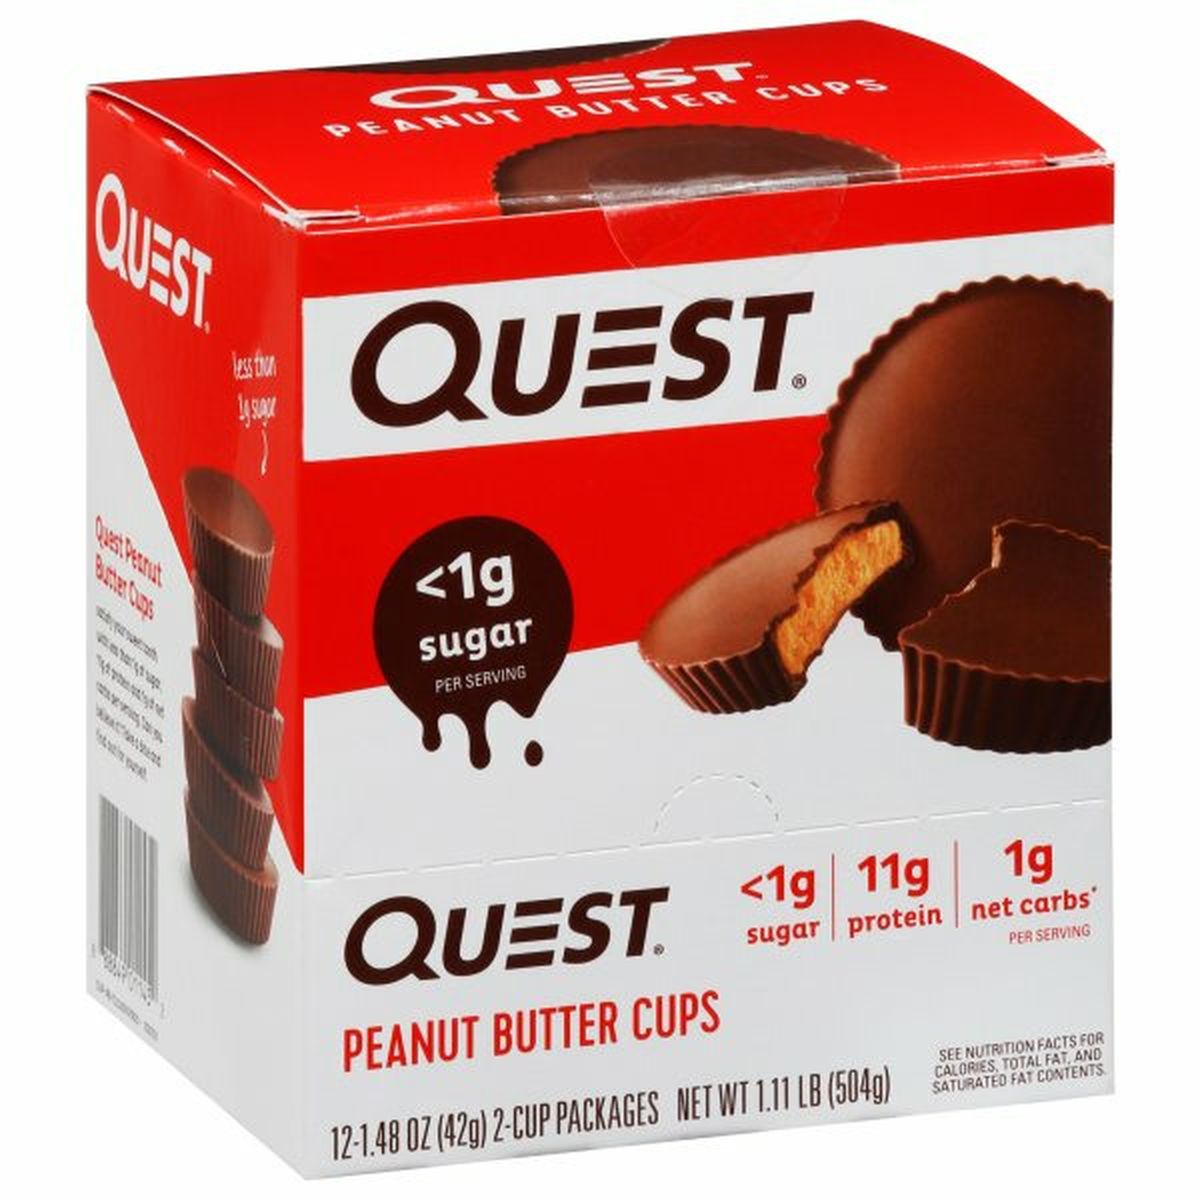 Calories in Quest Peanut Butter Cups